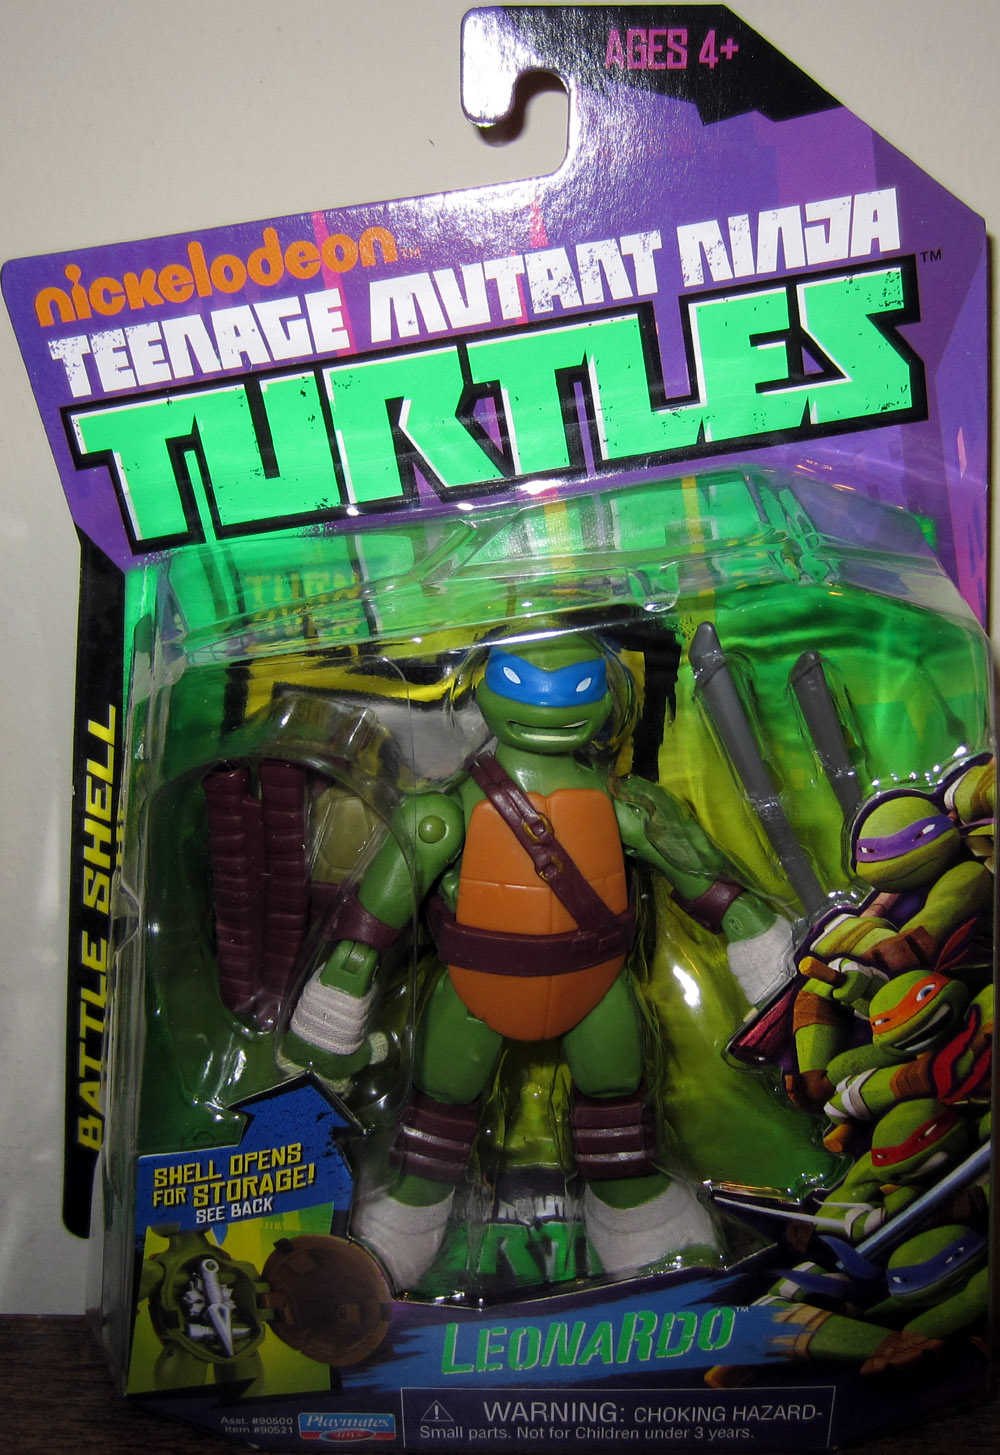 battle shell ninja turtles